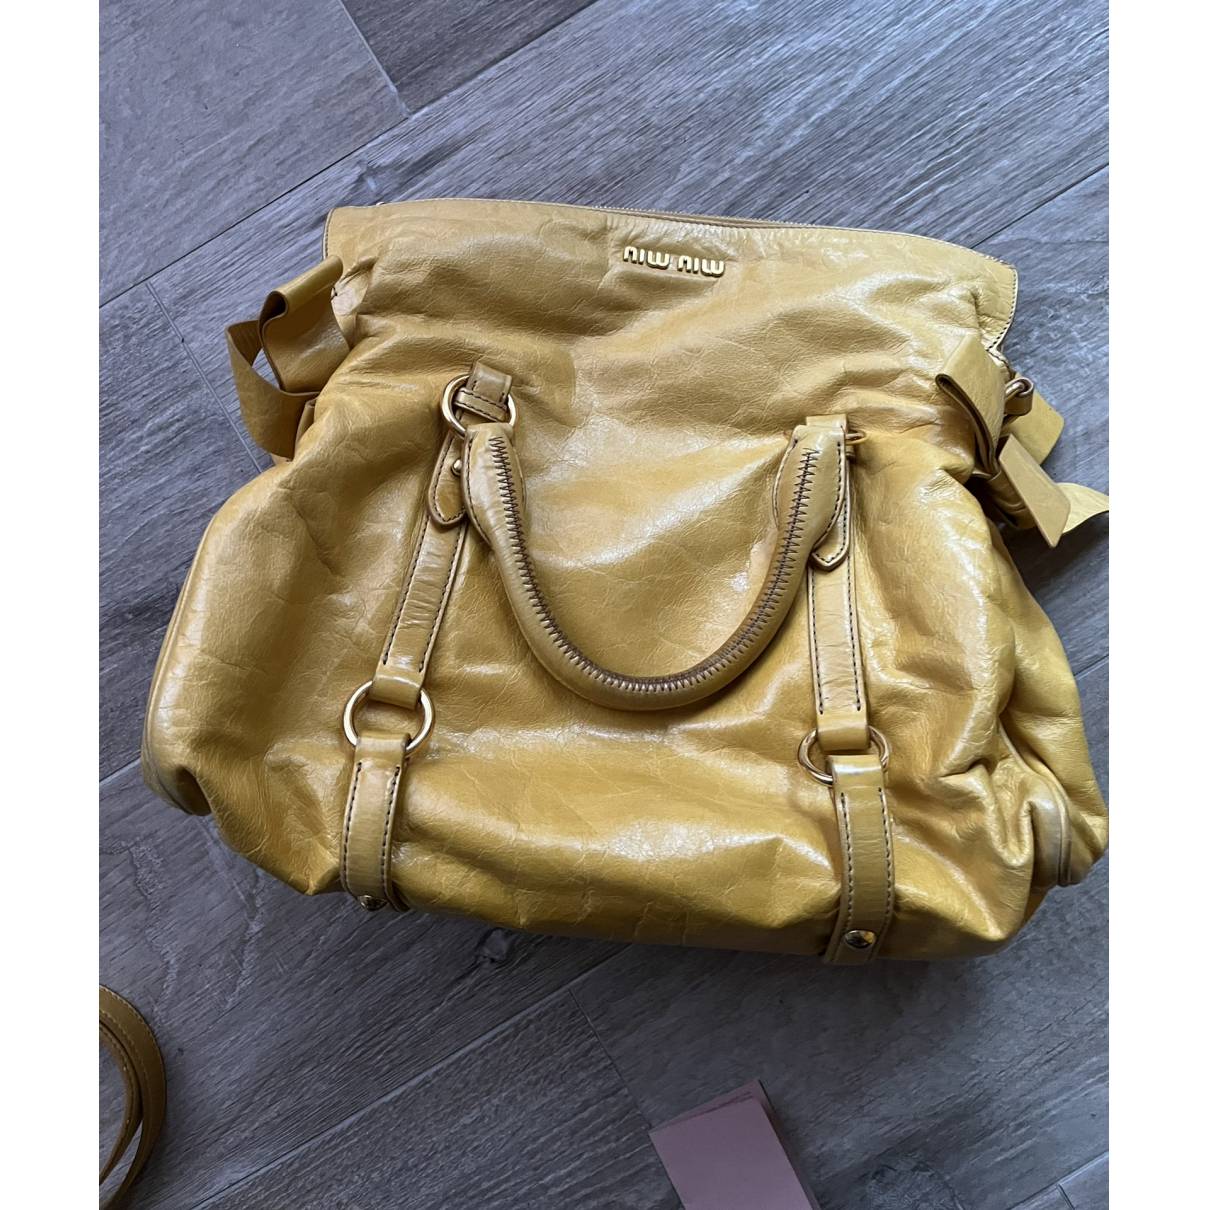 Miu Miu - Authenticated Bow Bag Handbag - Leather Yellow Plain for Women, Good Condition